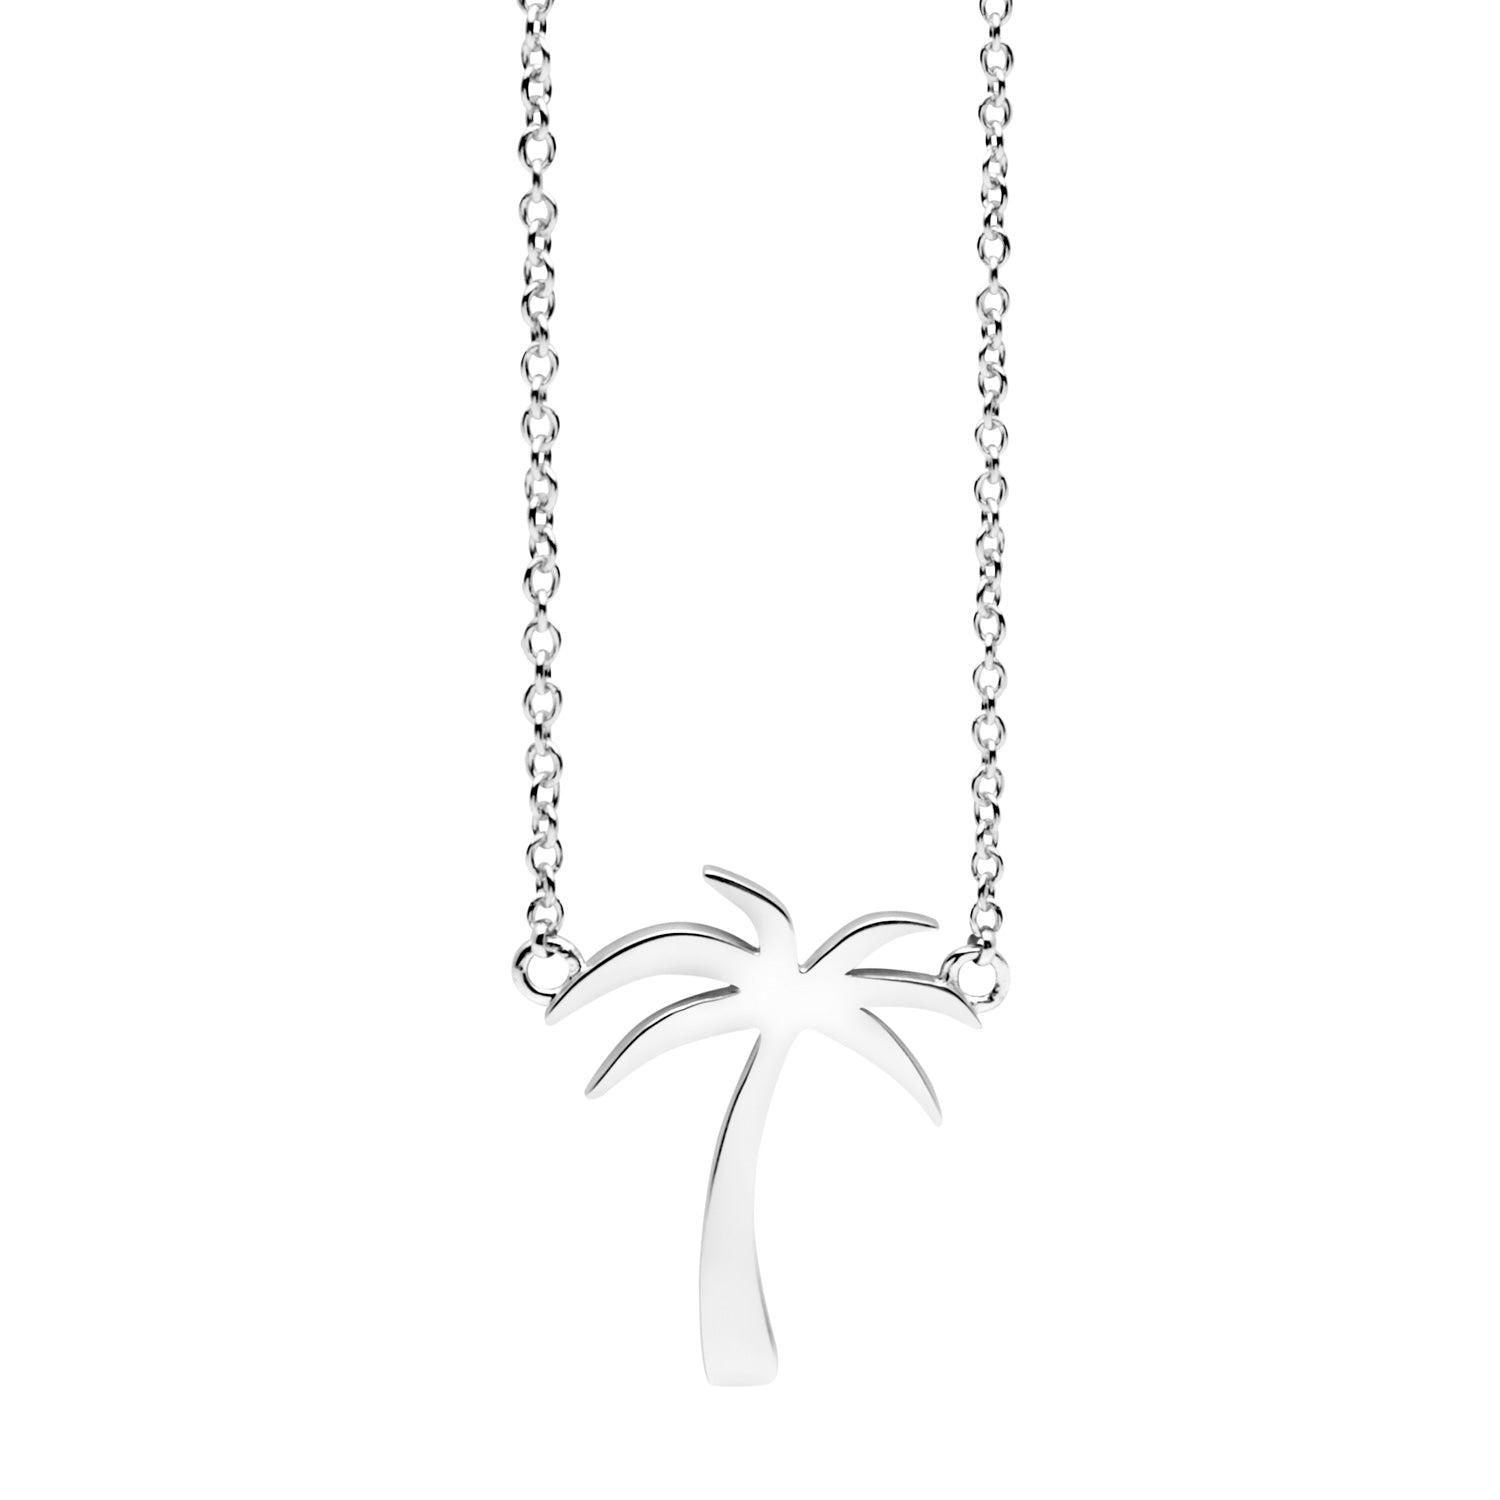 Kette Necklace Collier Halskette Beach Life Tree - NANA KAY Jewelry Deutschland - Sterling Silber Schmuck